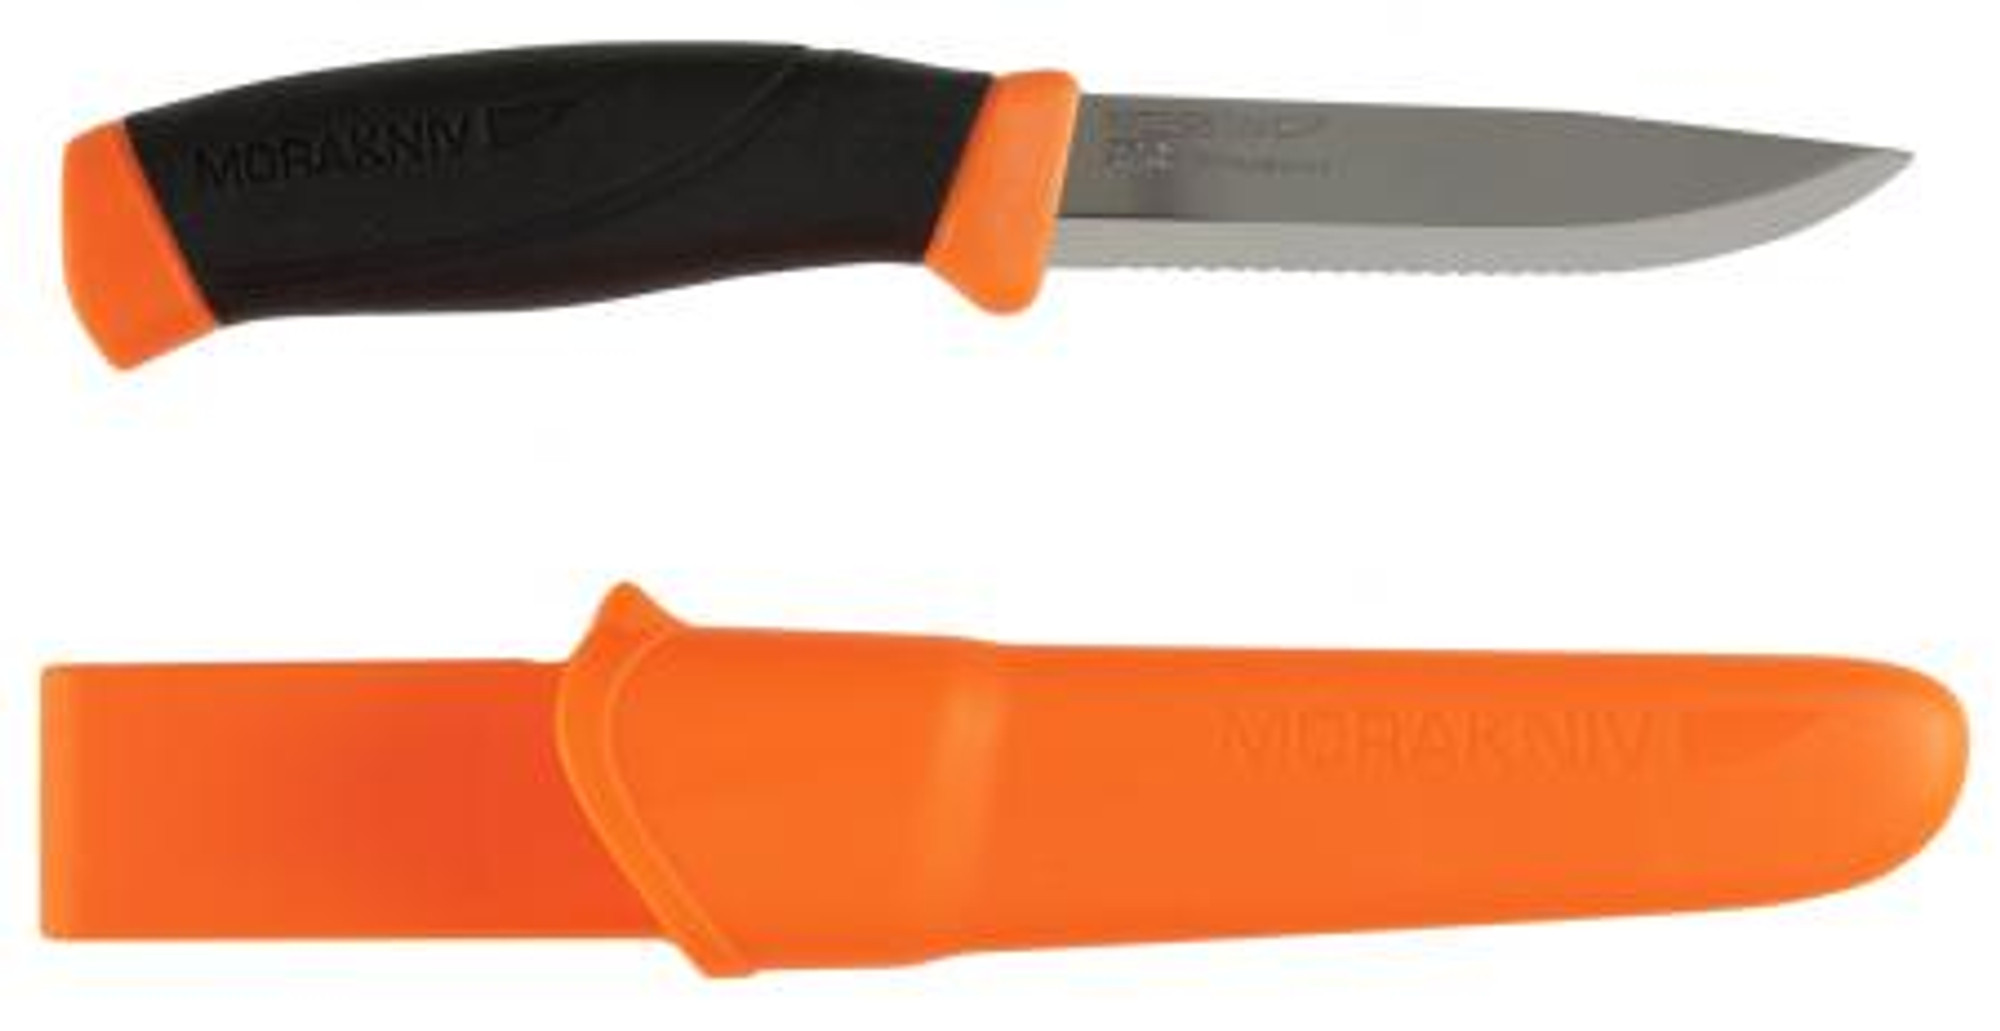 Mora Companion Serrated M-11829 Knife - Orange